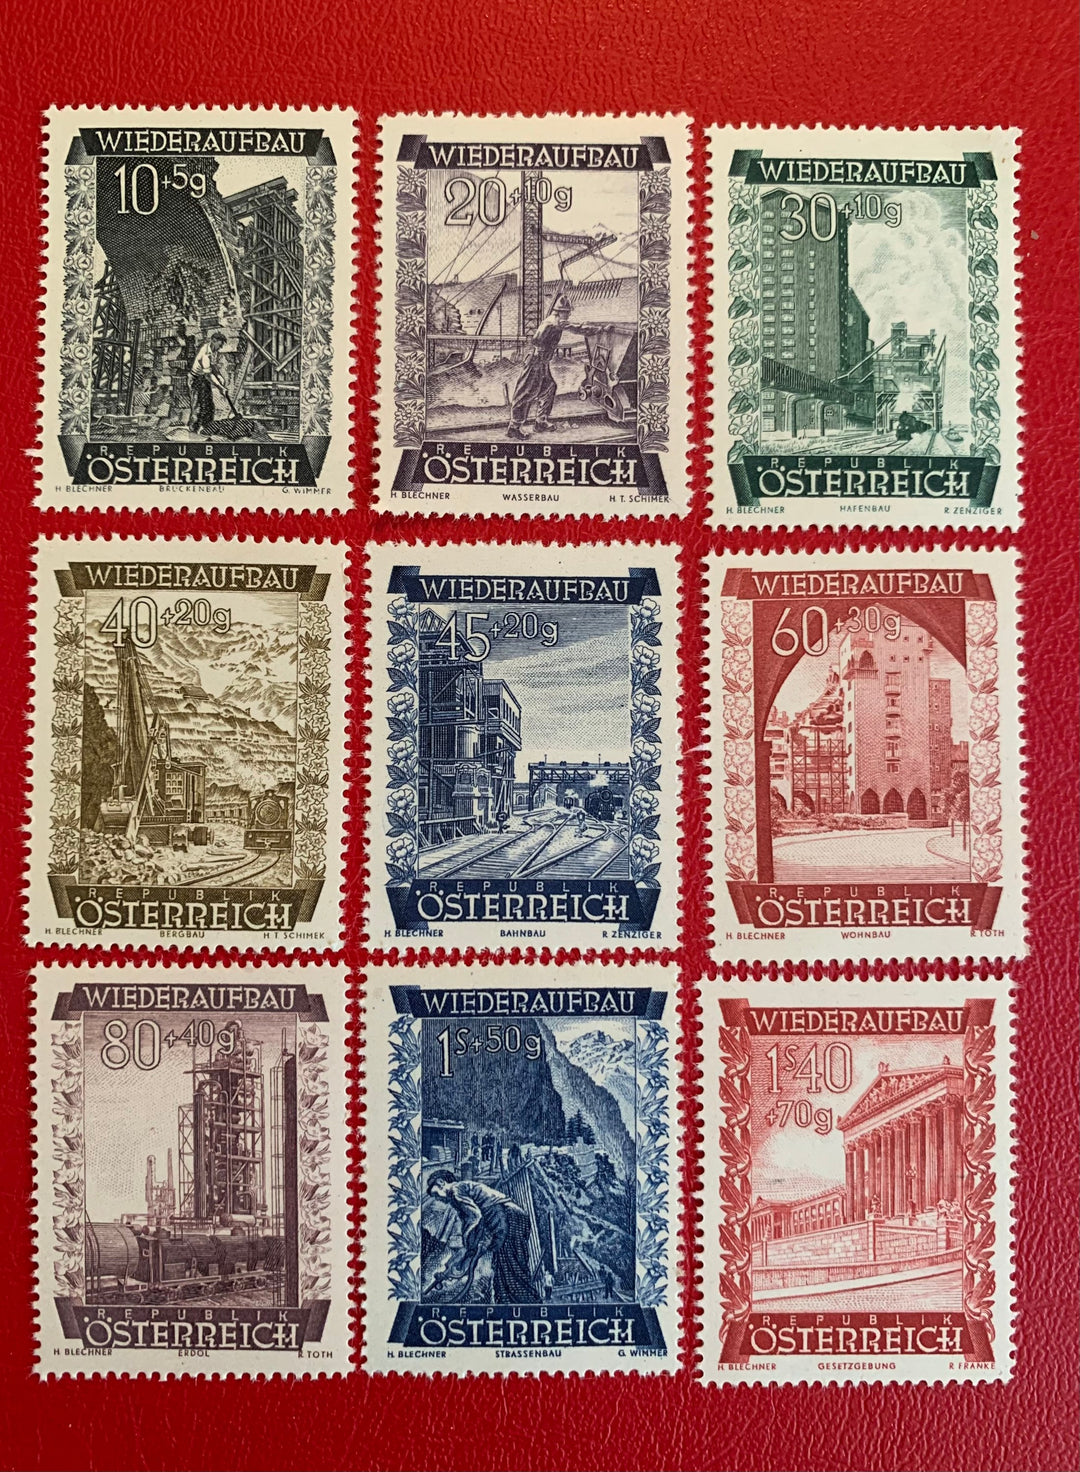 Austria - Original Vintage Postage Stamps - 1948- Build